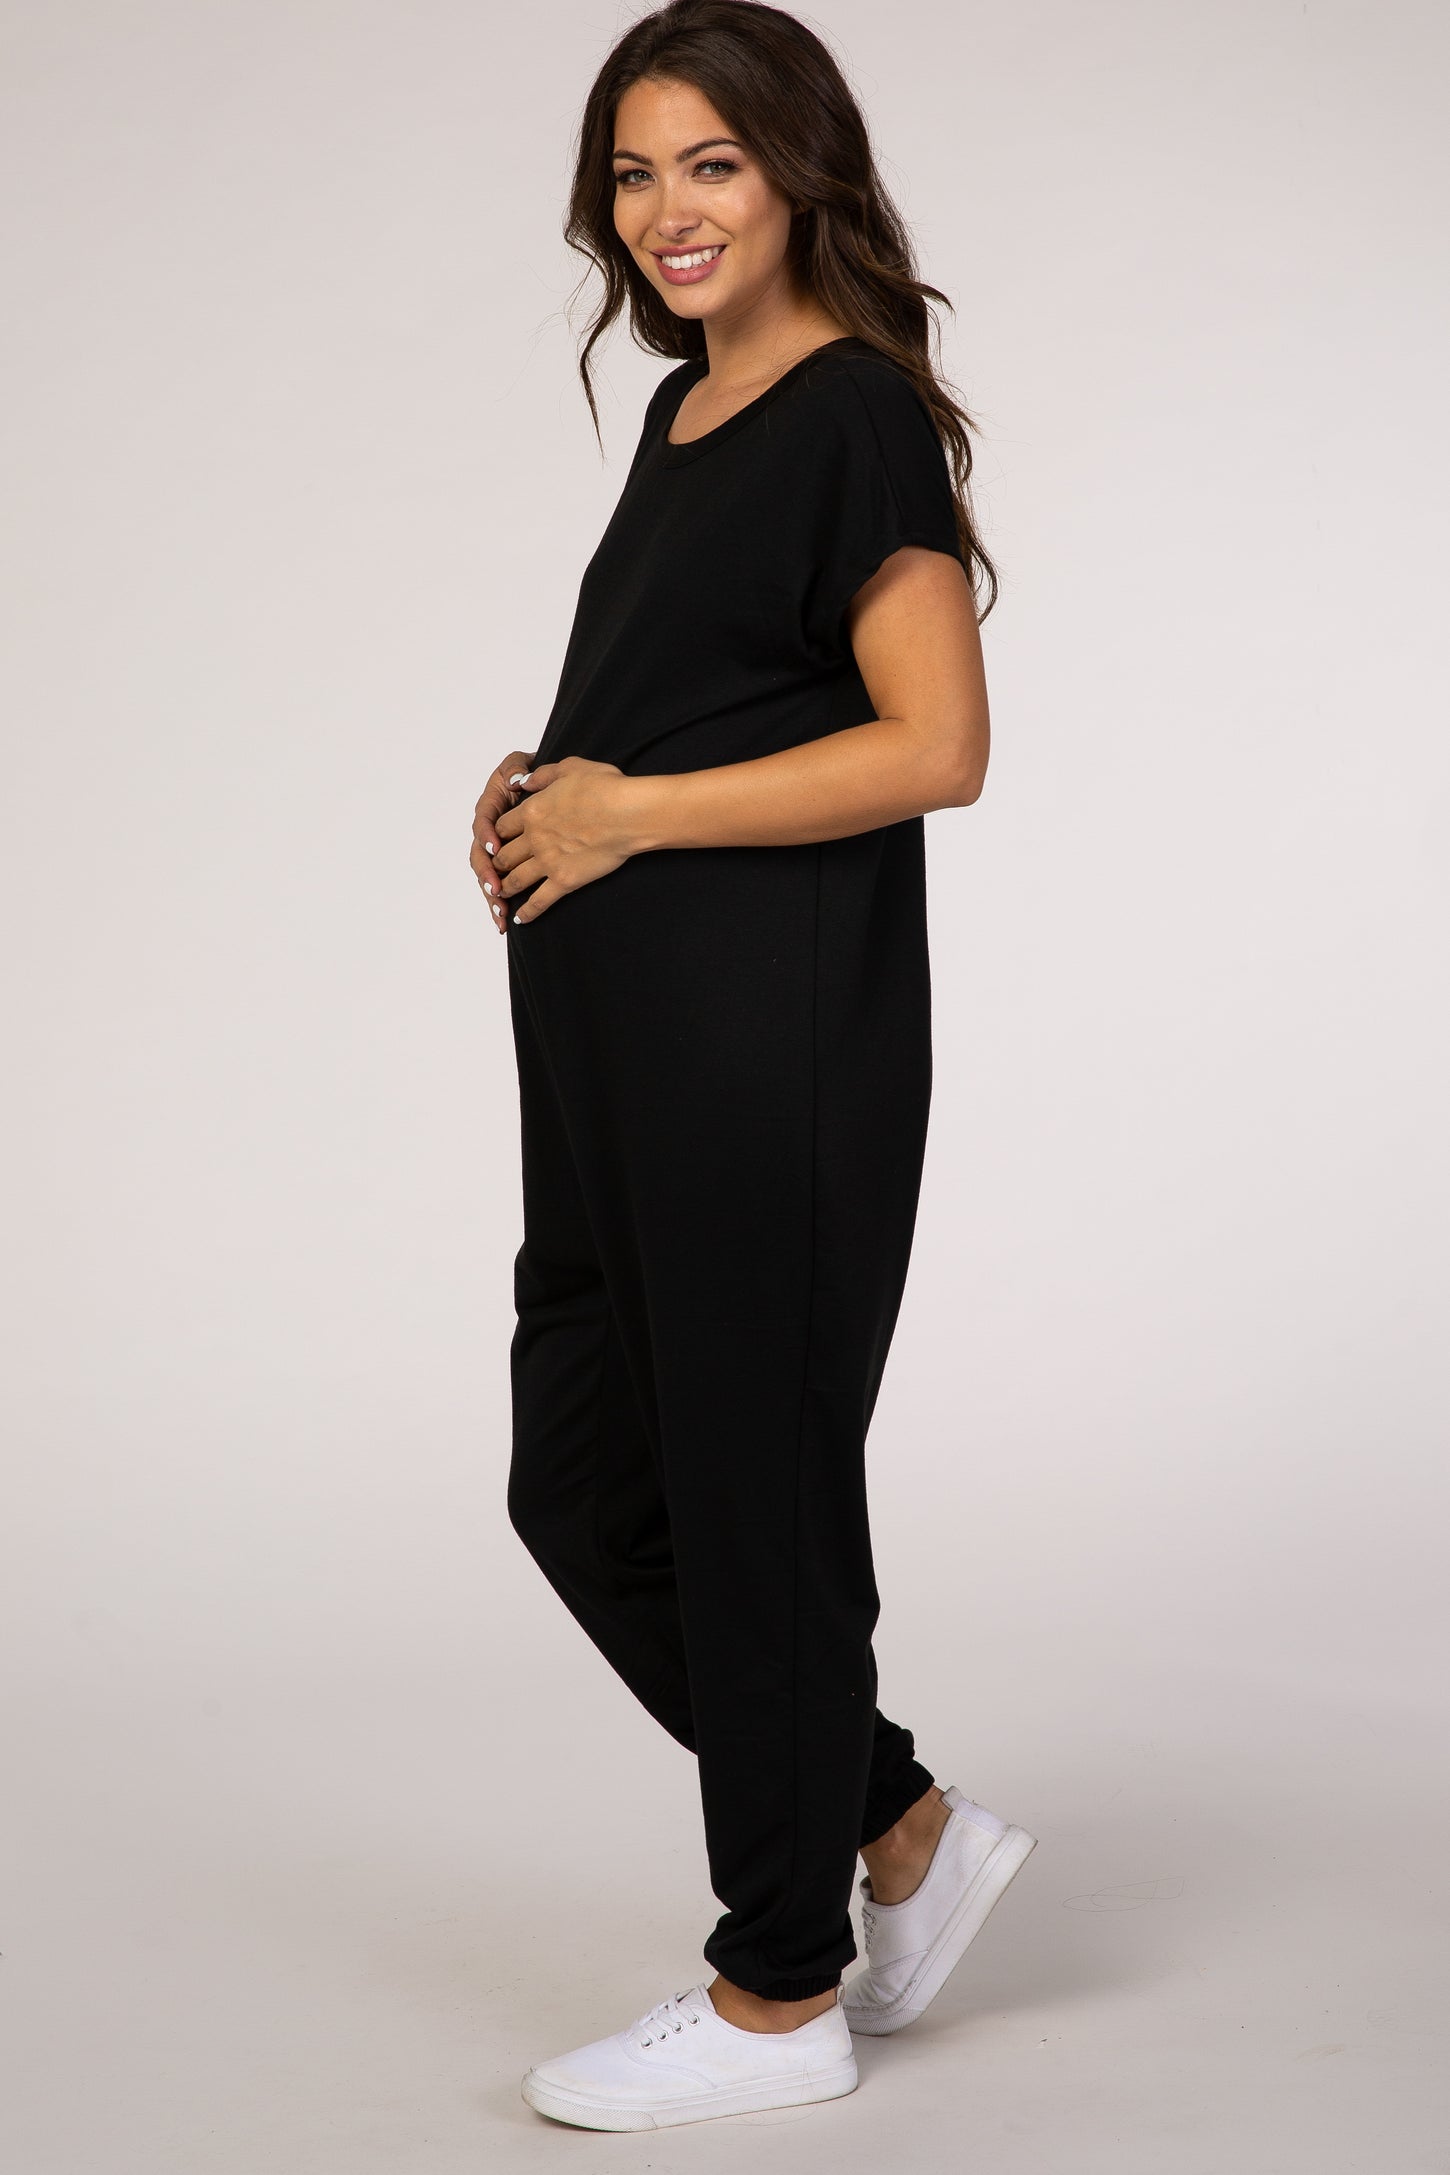 PinkBlush Black Short Sleeve Maternity Jumpsuit